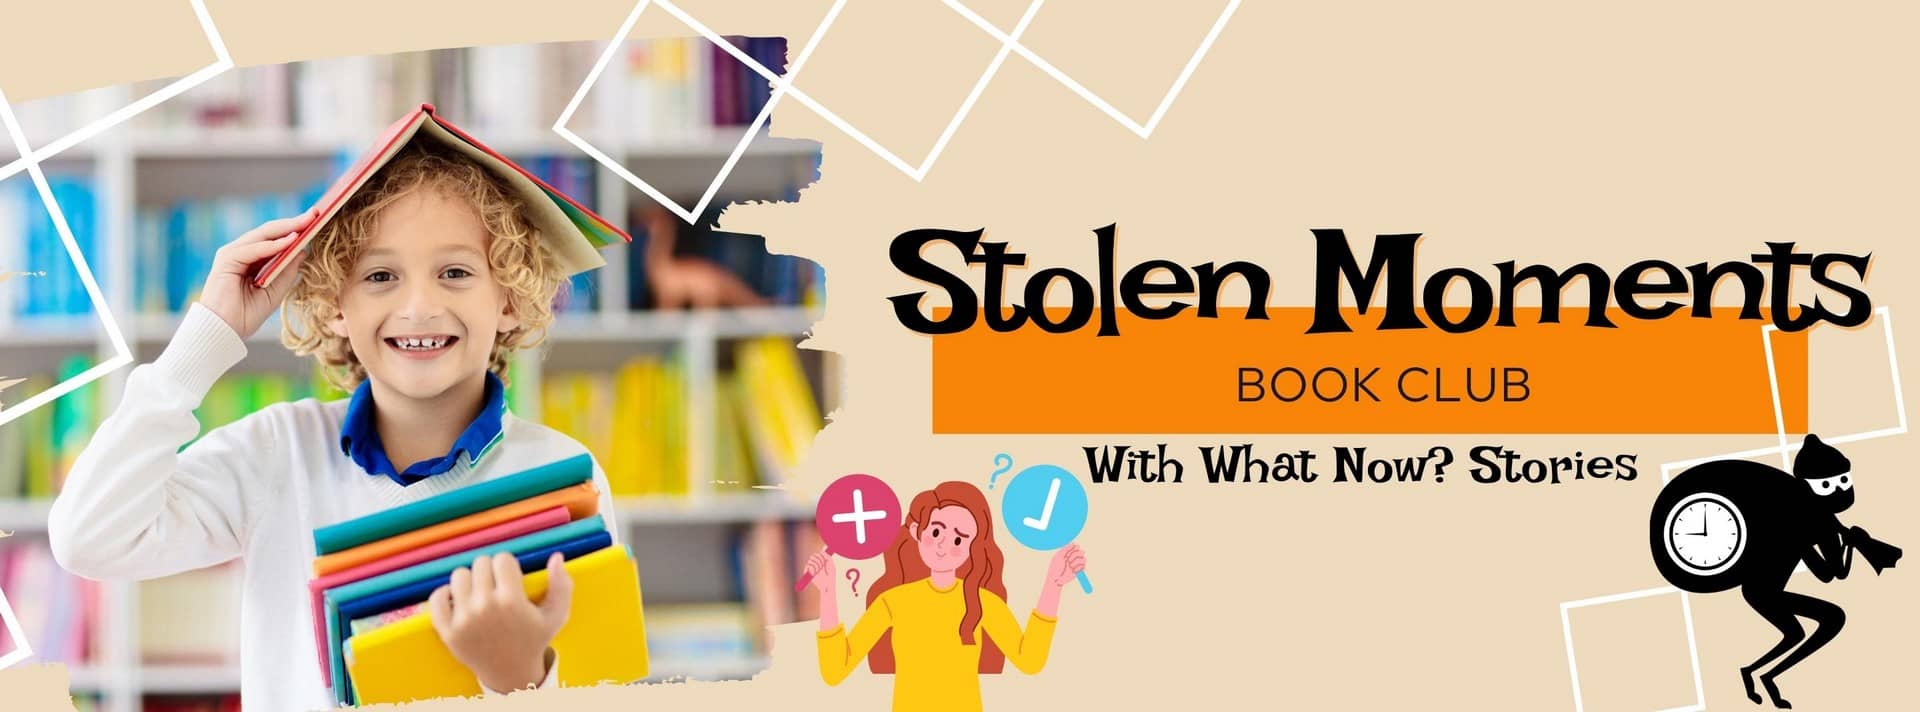 Stolen Moments Book Club